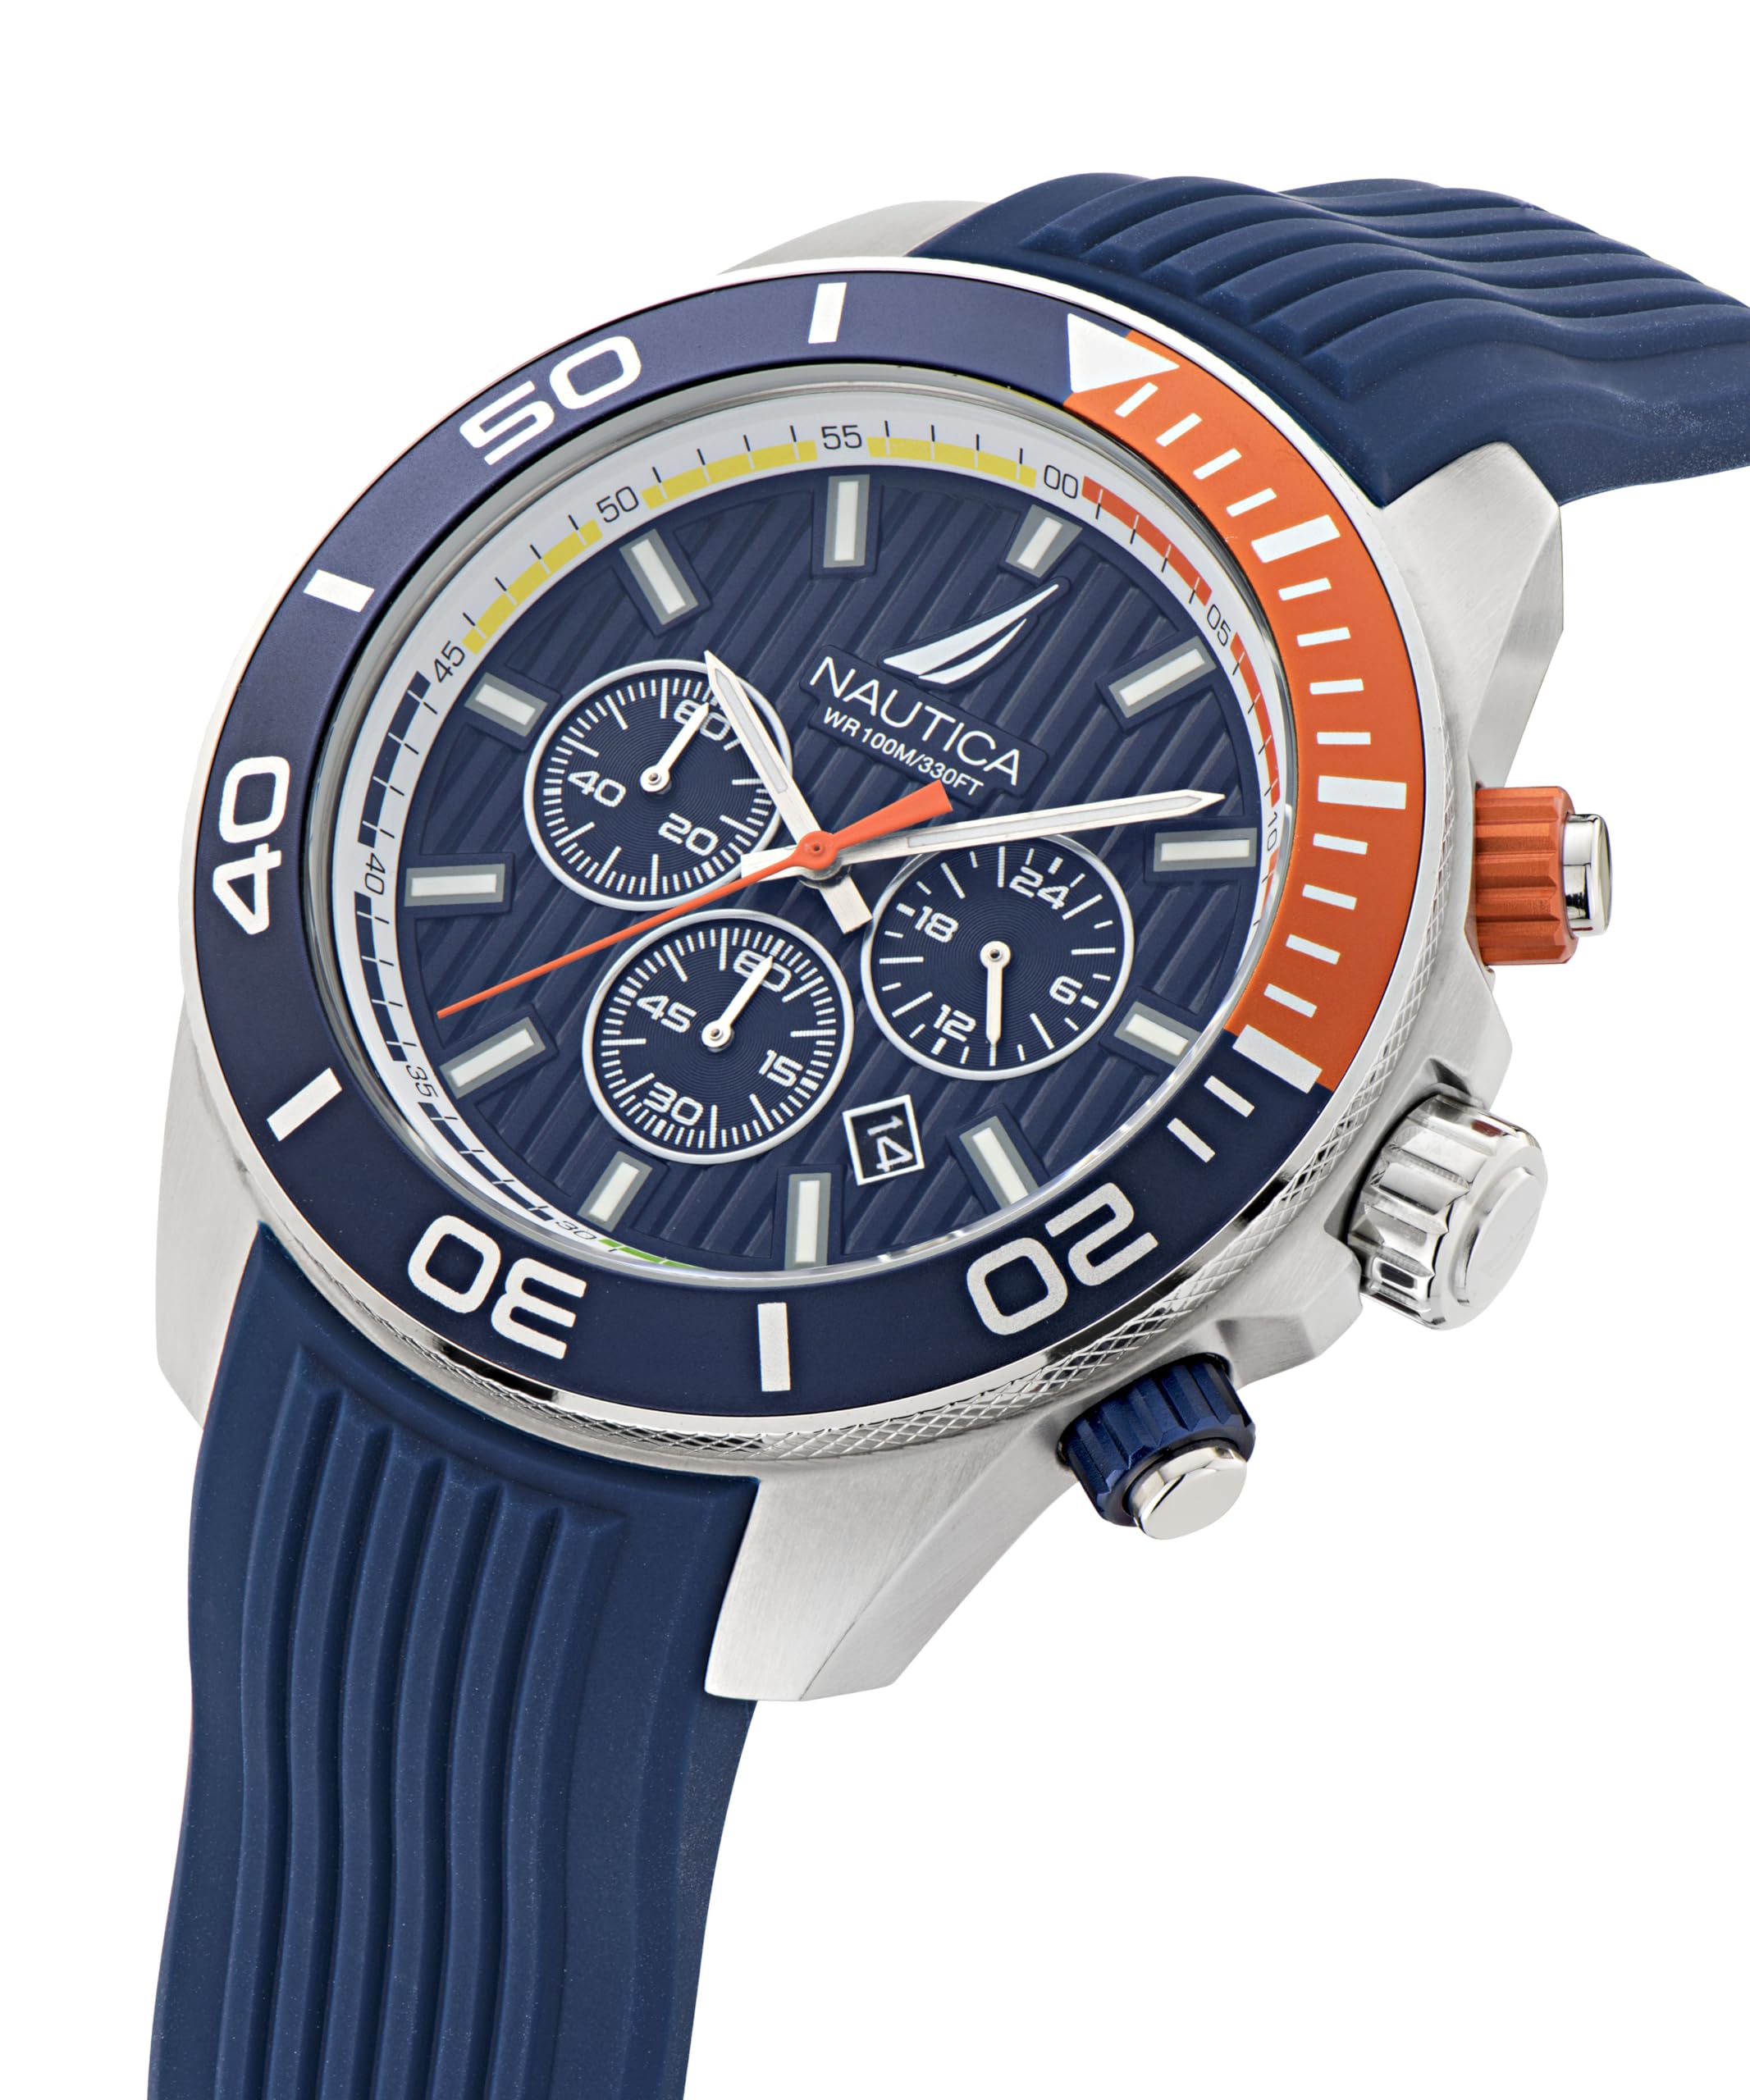 Nautica Men's NAPNOF302 One Blue Silicone Strap Watch